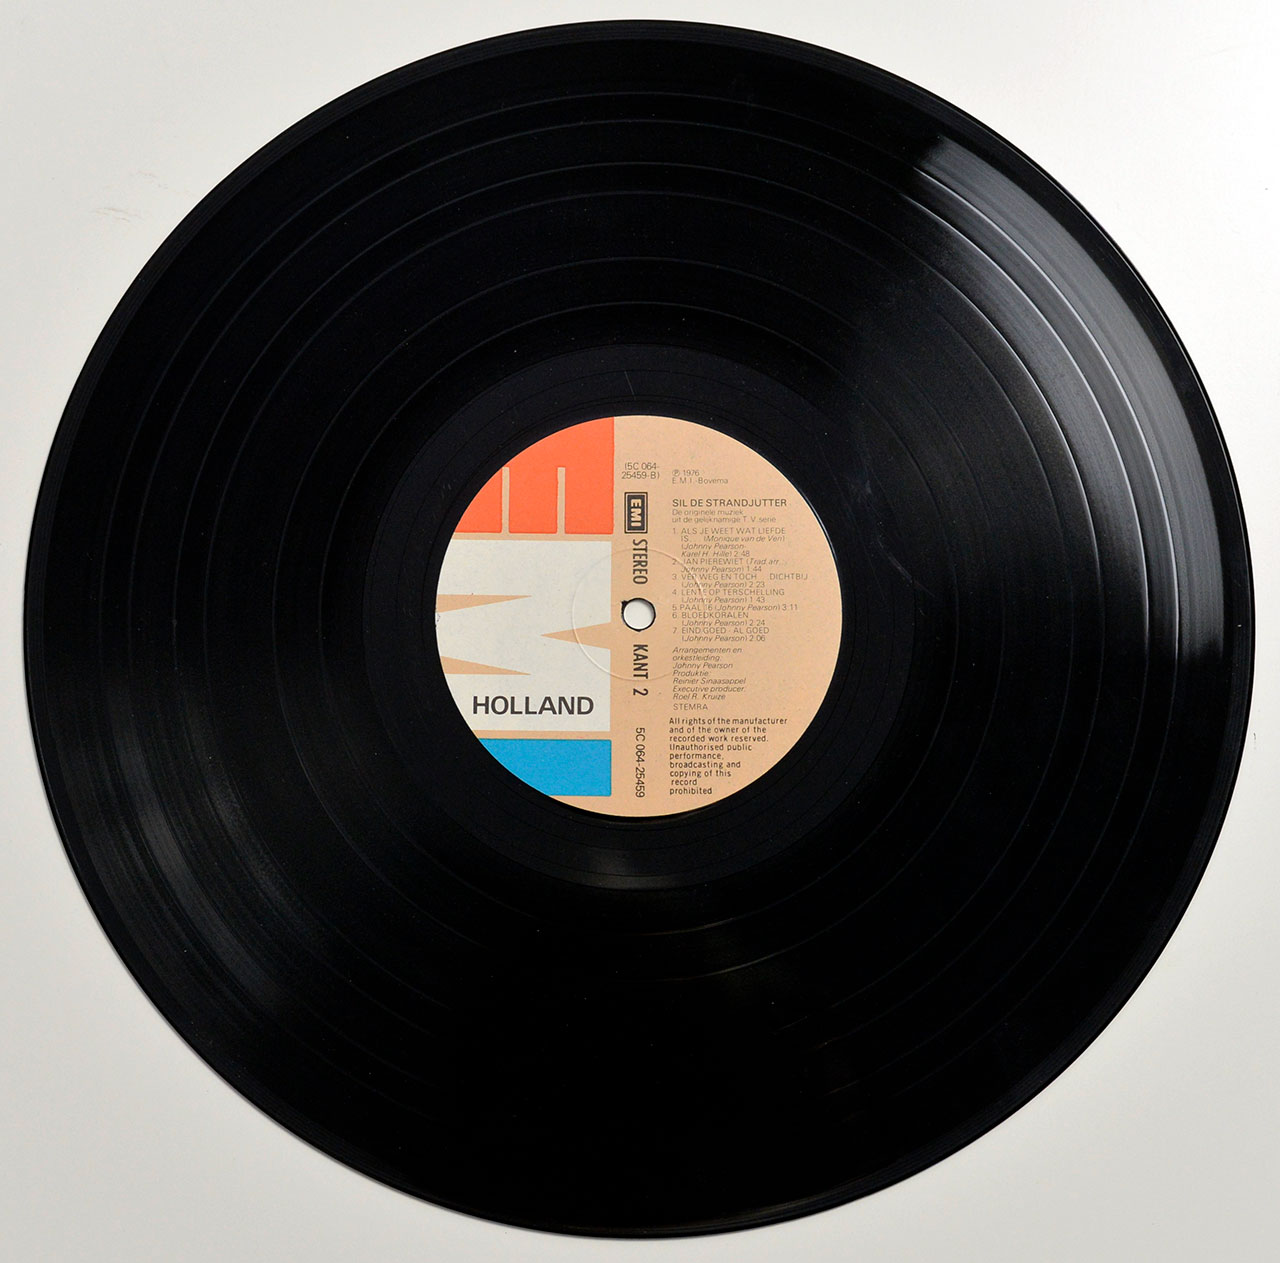 Photo of Side Two of JOHNNY PEARSON Sil De Strandjutter OST Soundtrack 12" LP Vinyl Album 